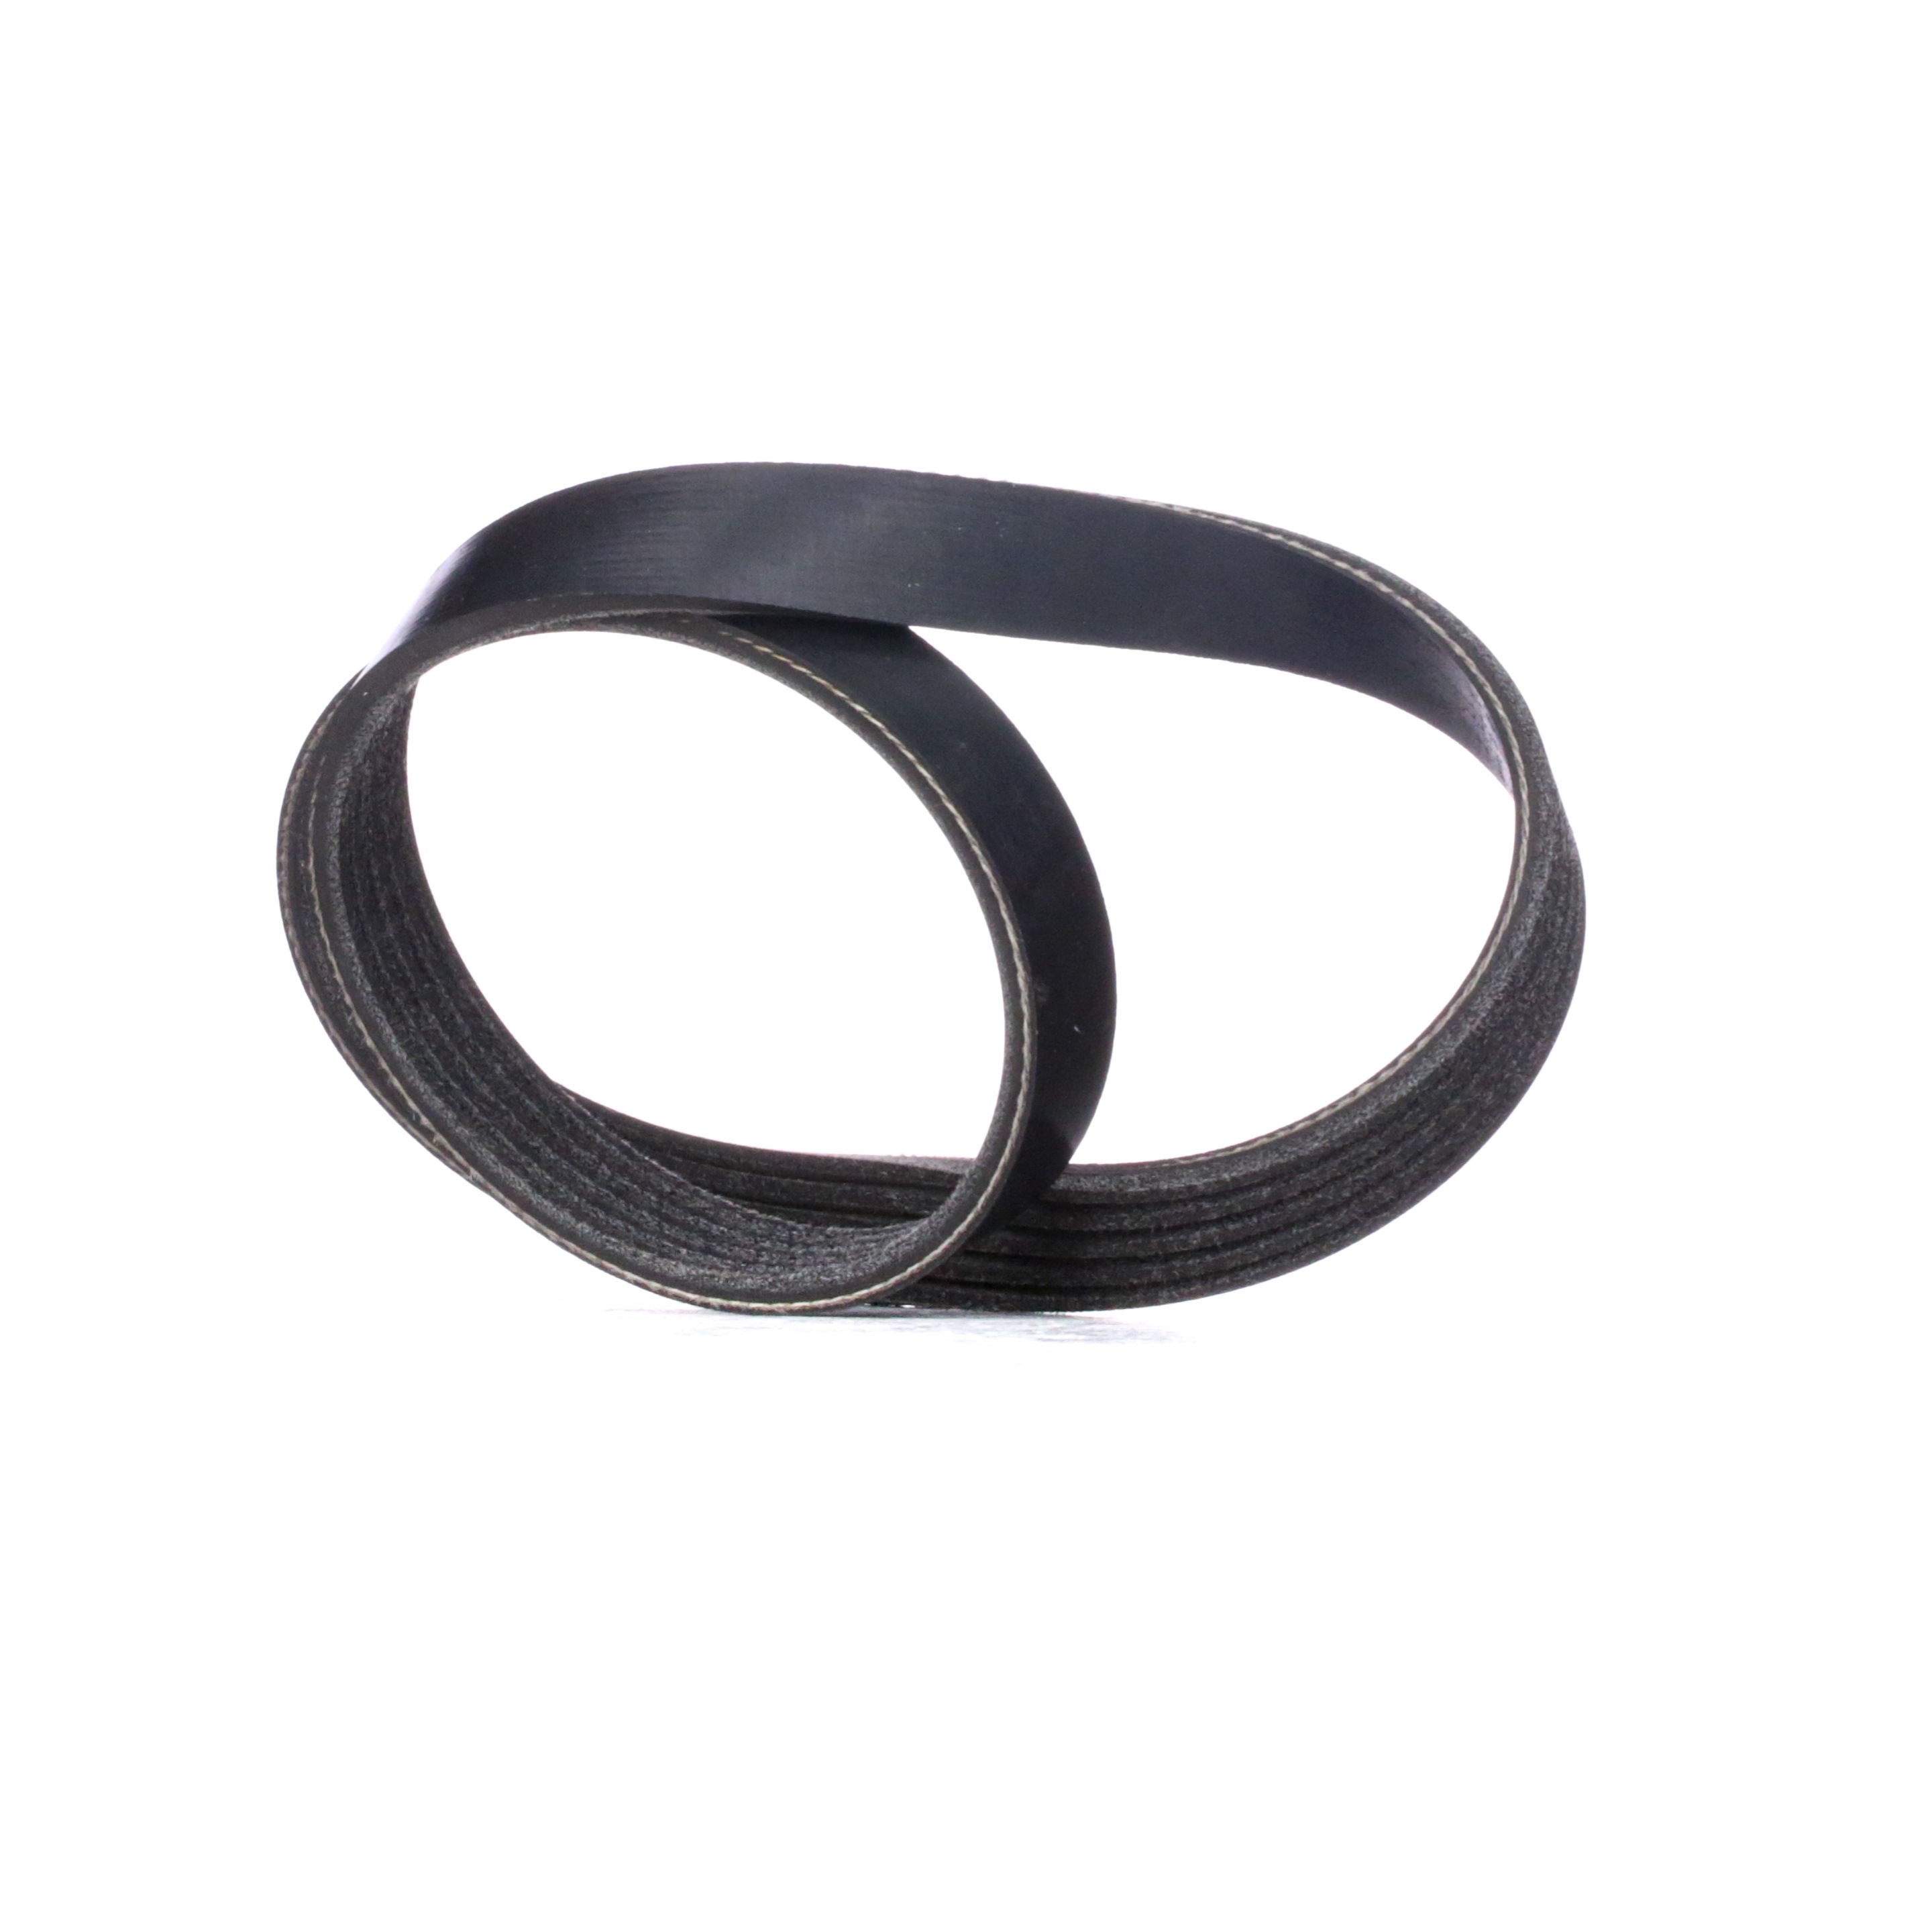 RIDEX 305P0301 Serpentine belt 705mm, 5, EPDM (ethylene propylene diene Monomer (M-class) rubber), Permanently elastic